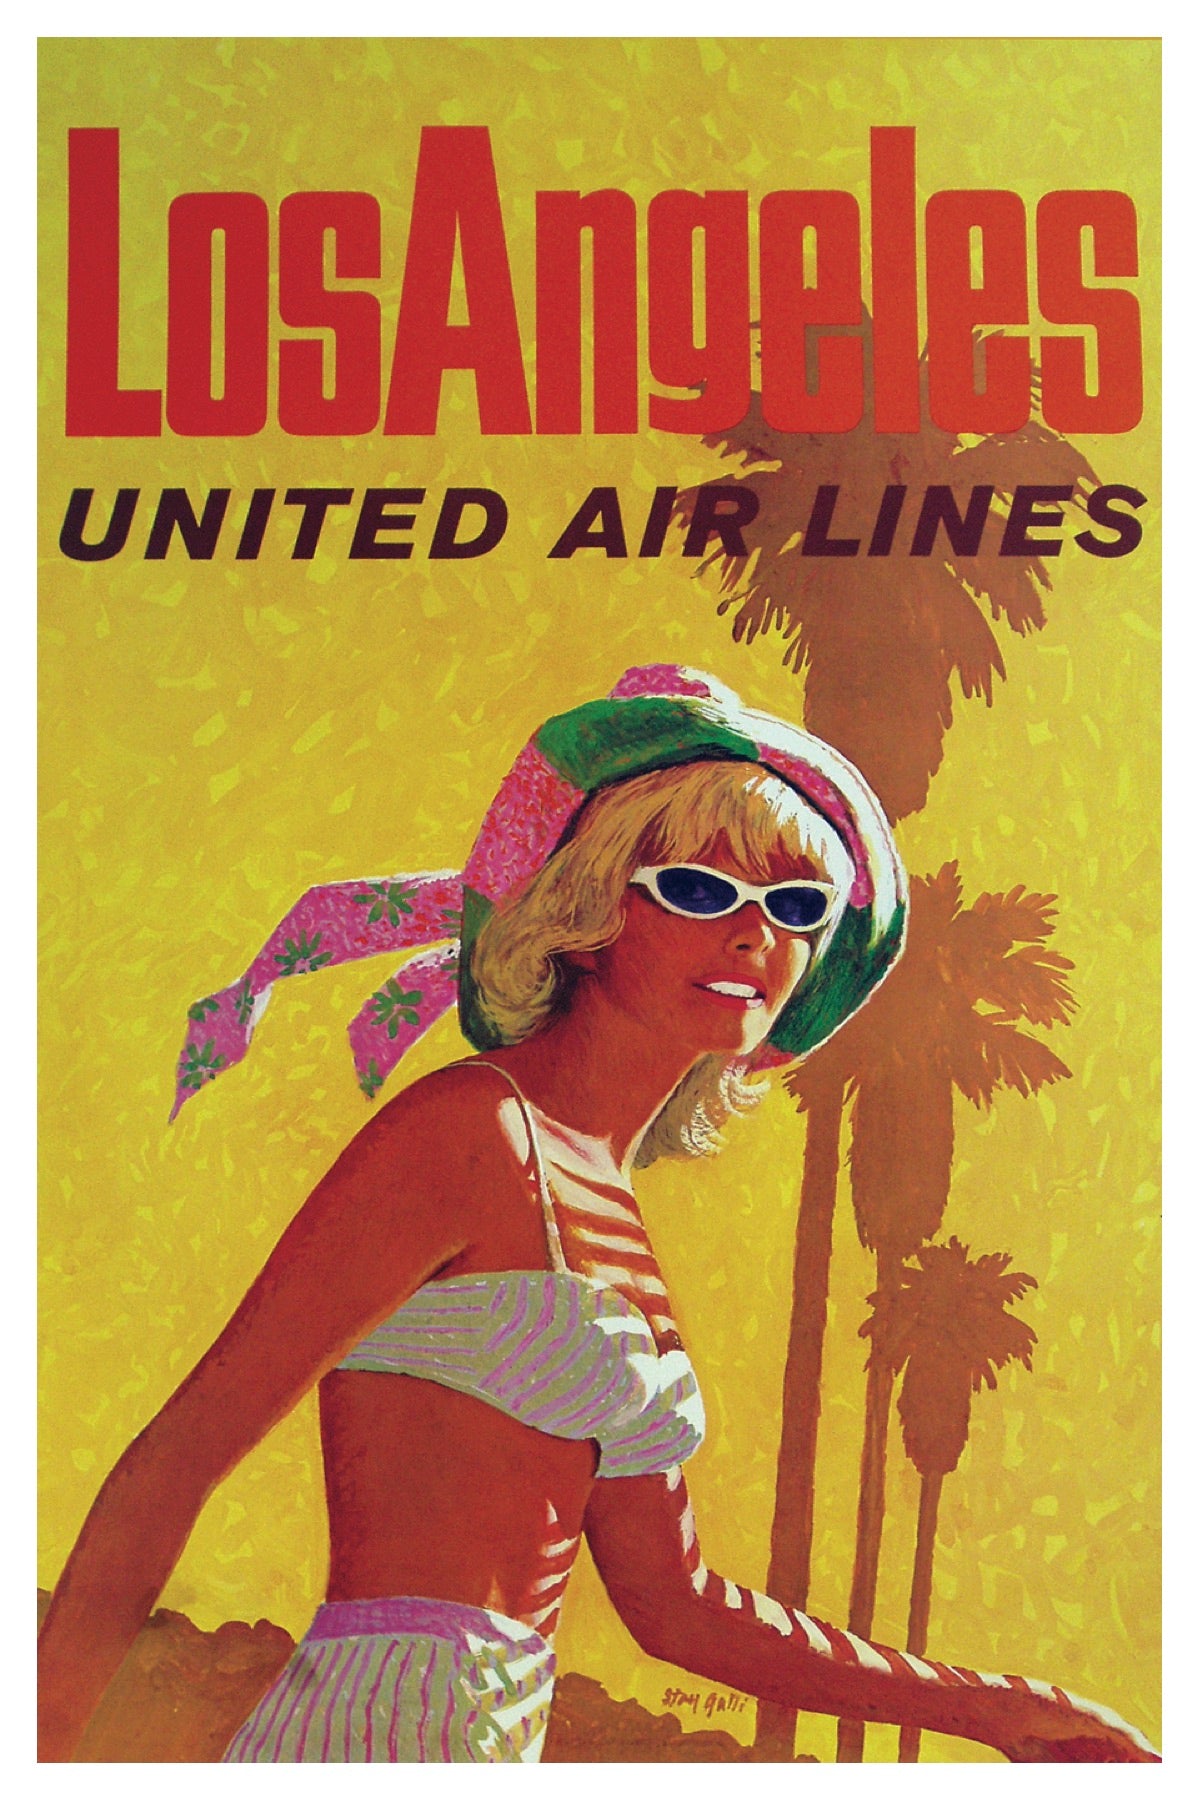 CARTE POSTALE LOS ANGELES UNITED AIR LINES